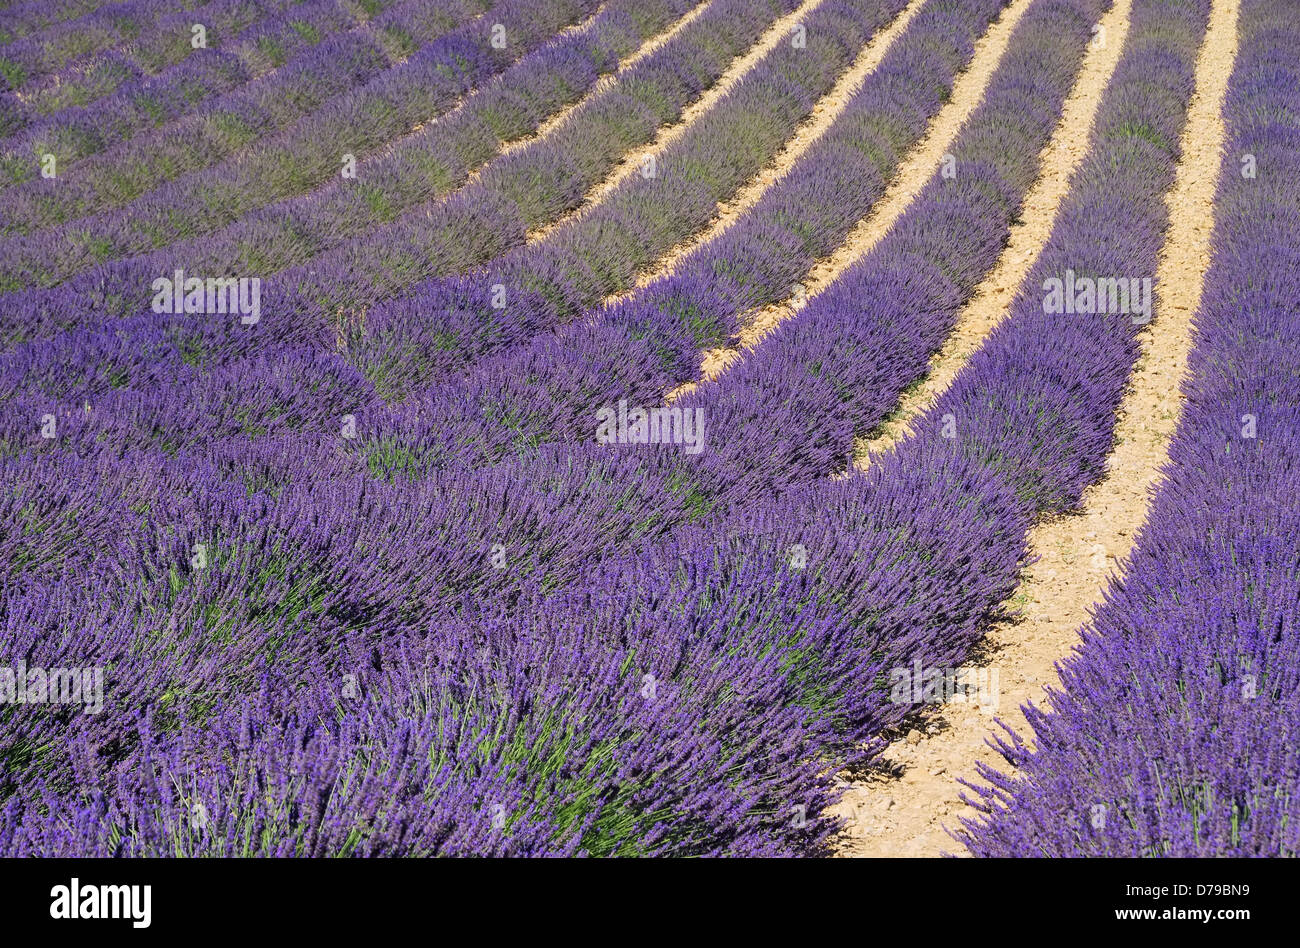 Lavendelfeld - lavender field 63 Stock Photo